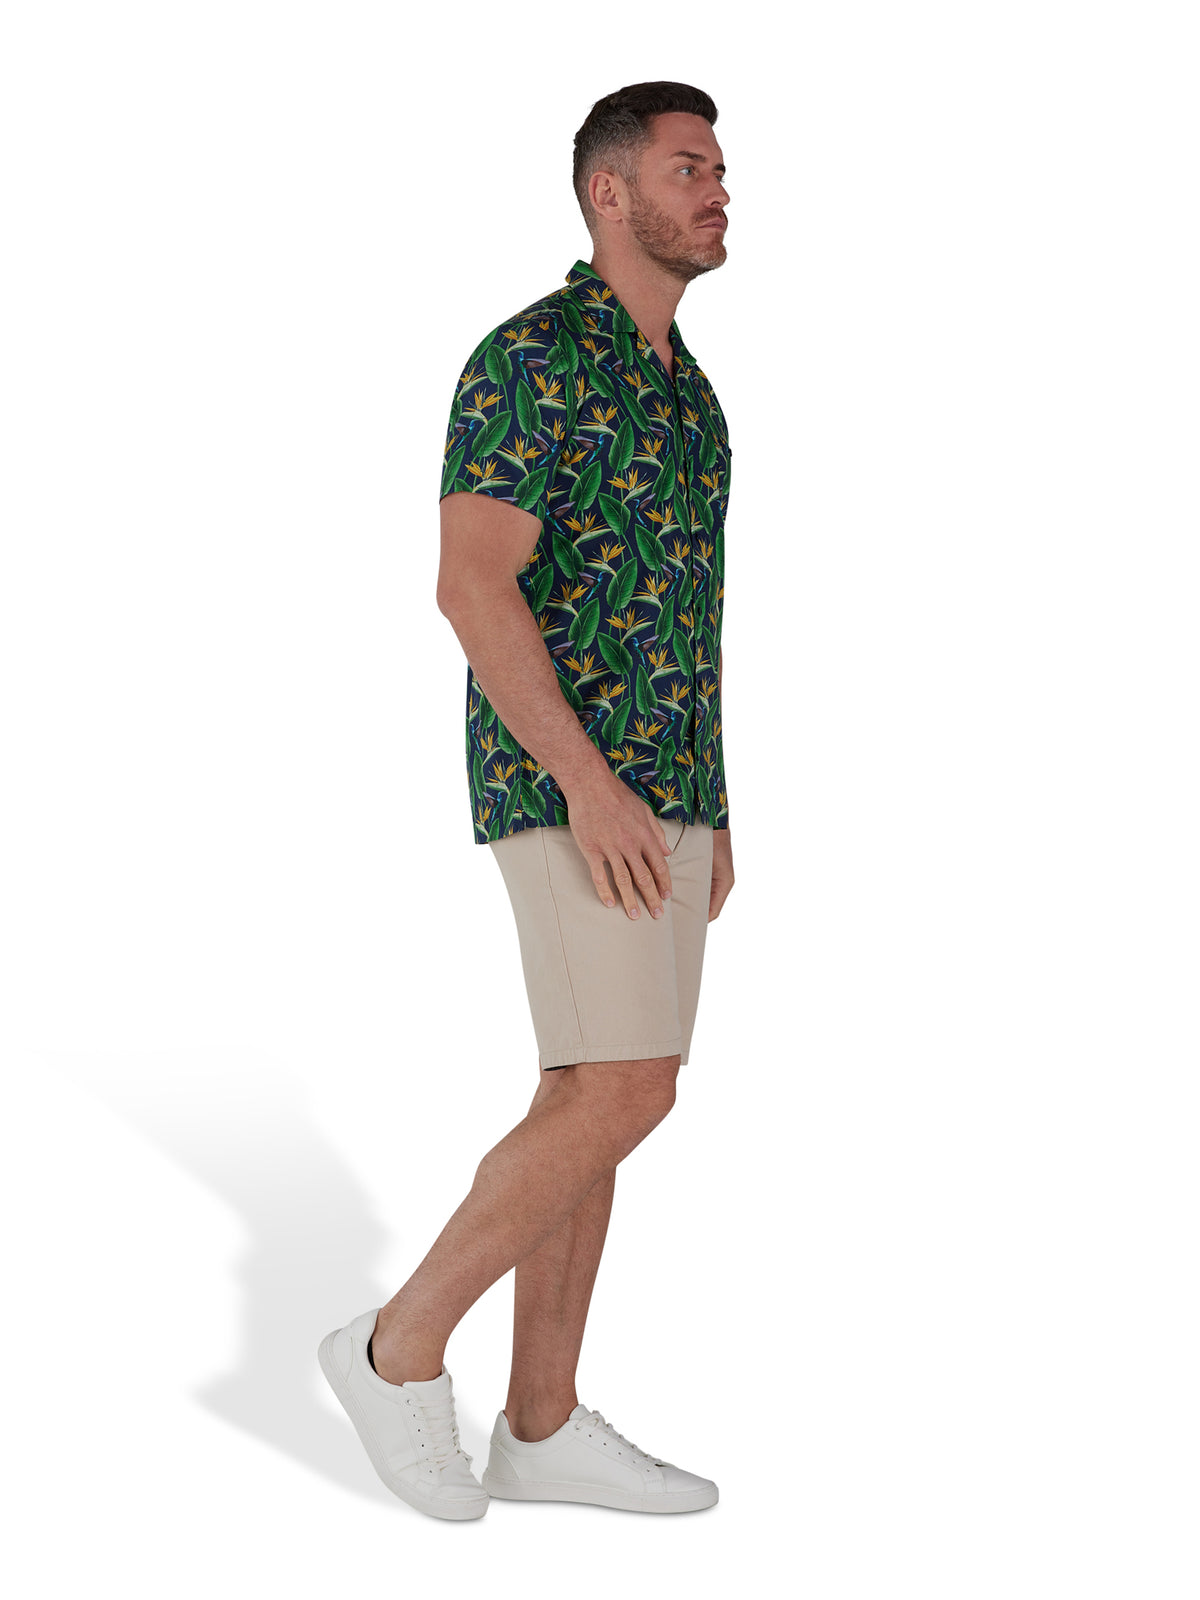 Short Sleeve Tropical Print Shirt - Navy